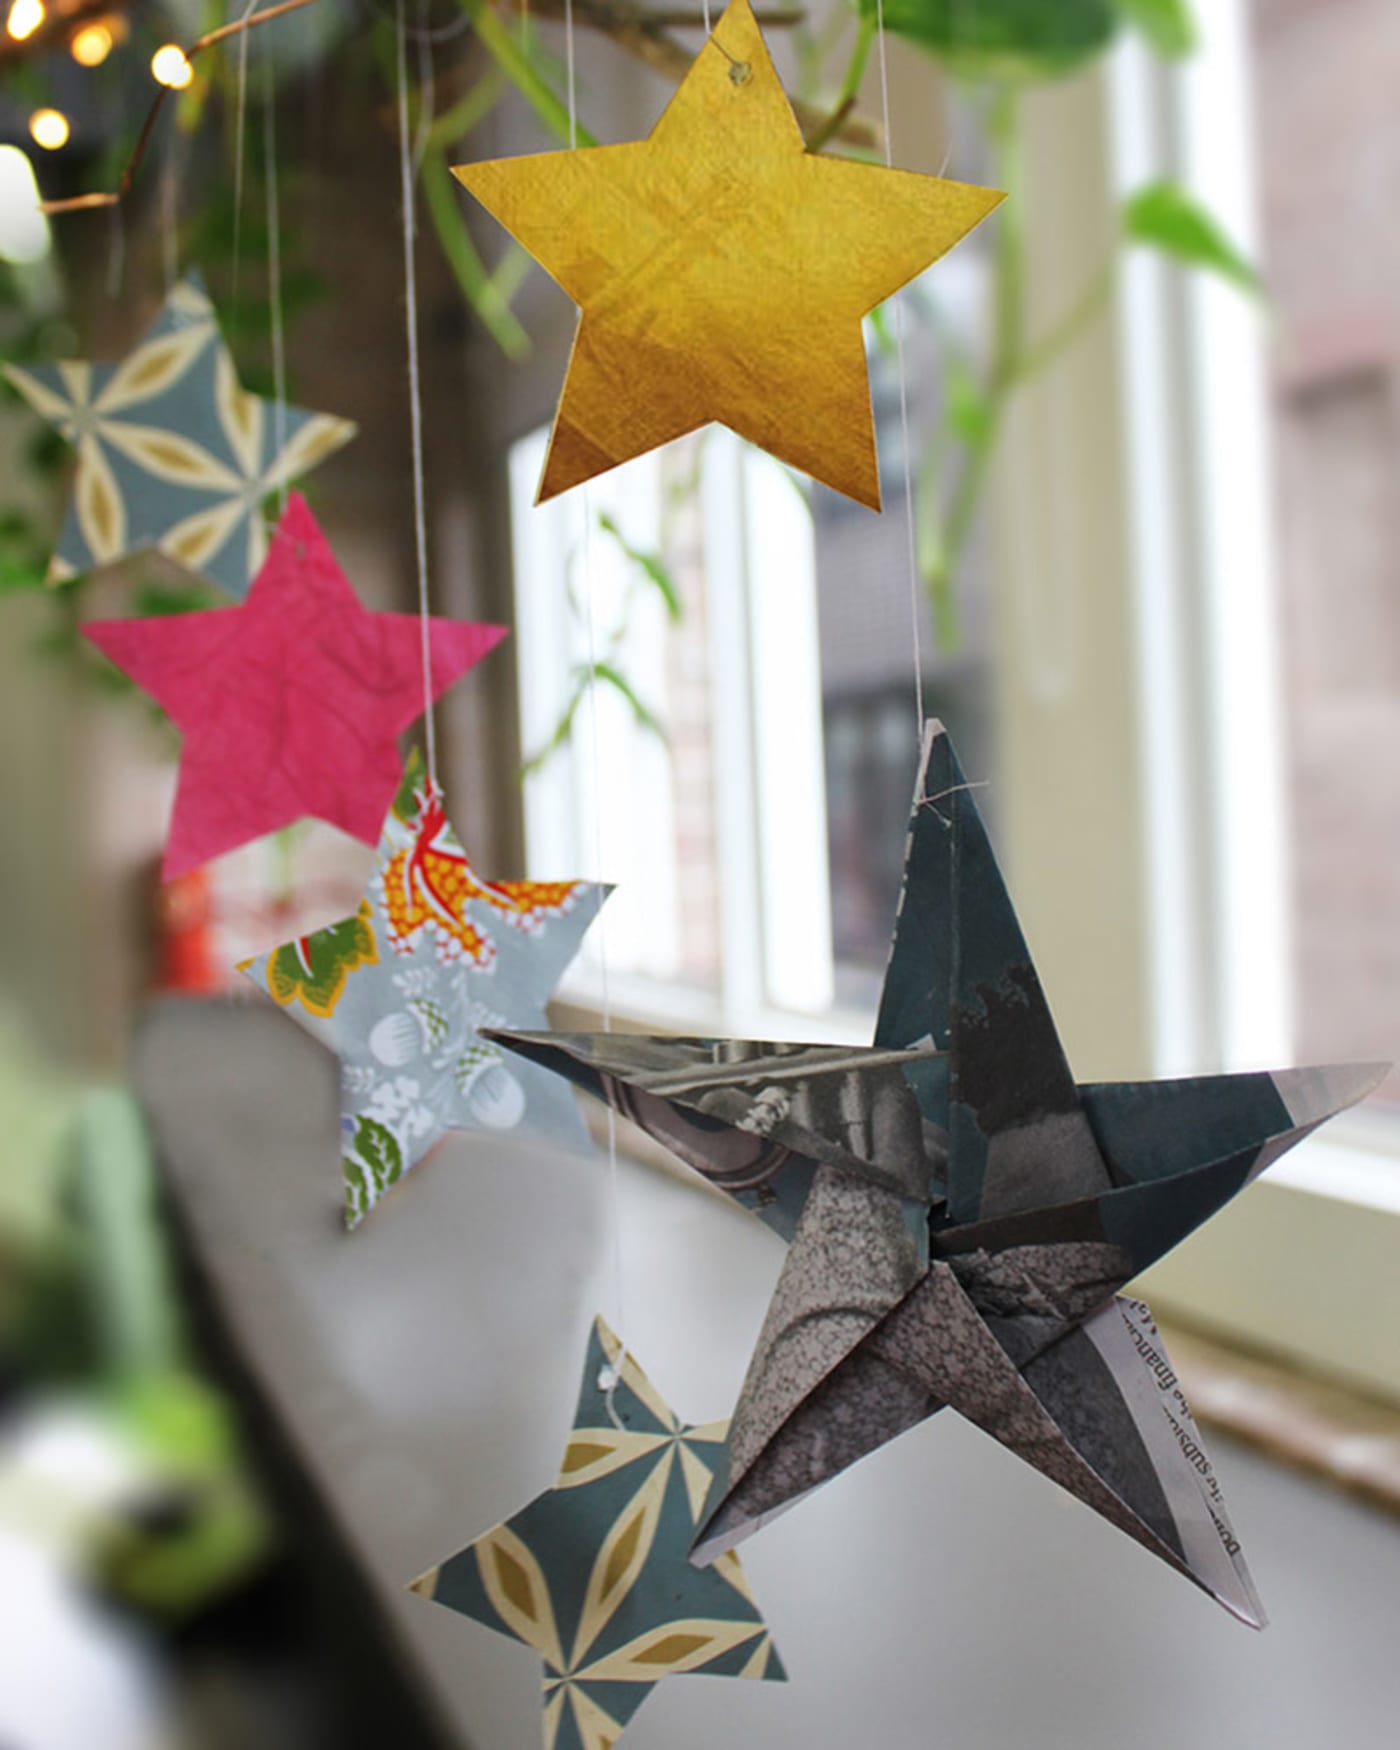 Hanging origami stars